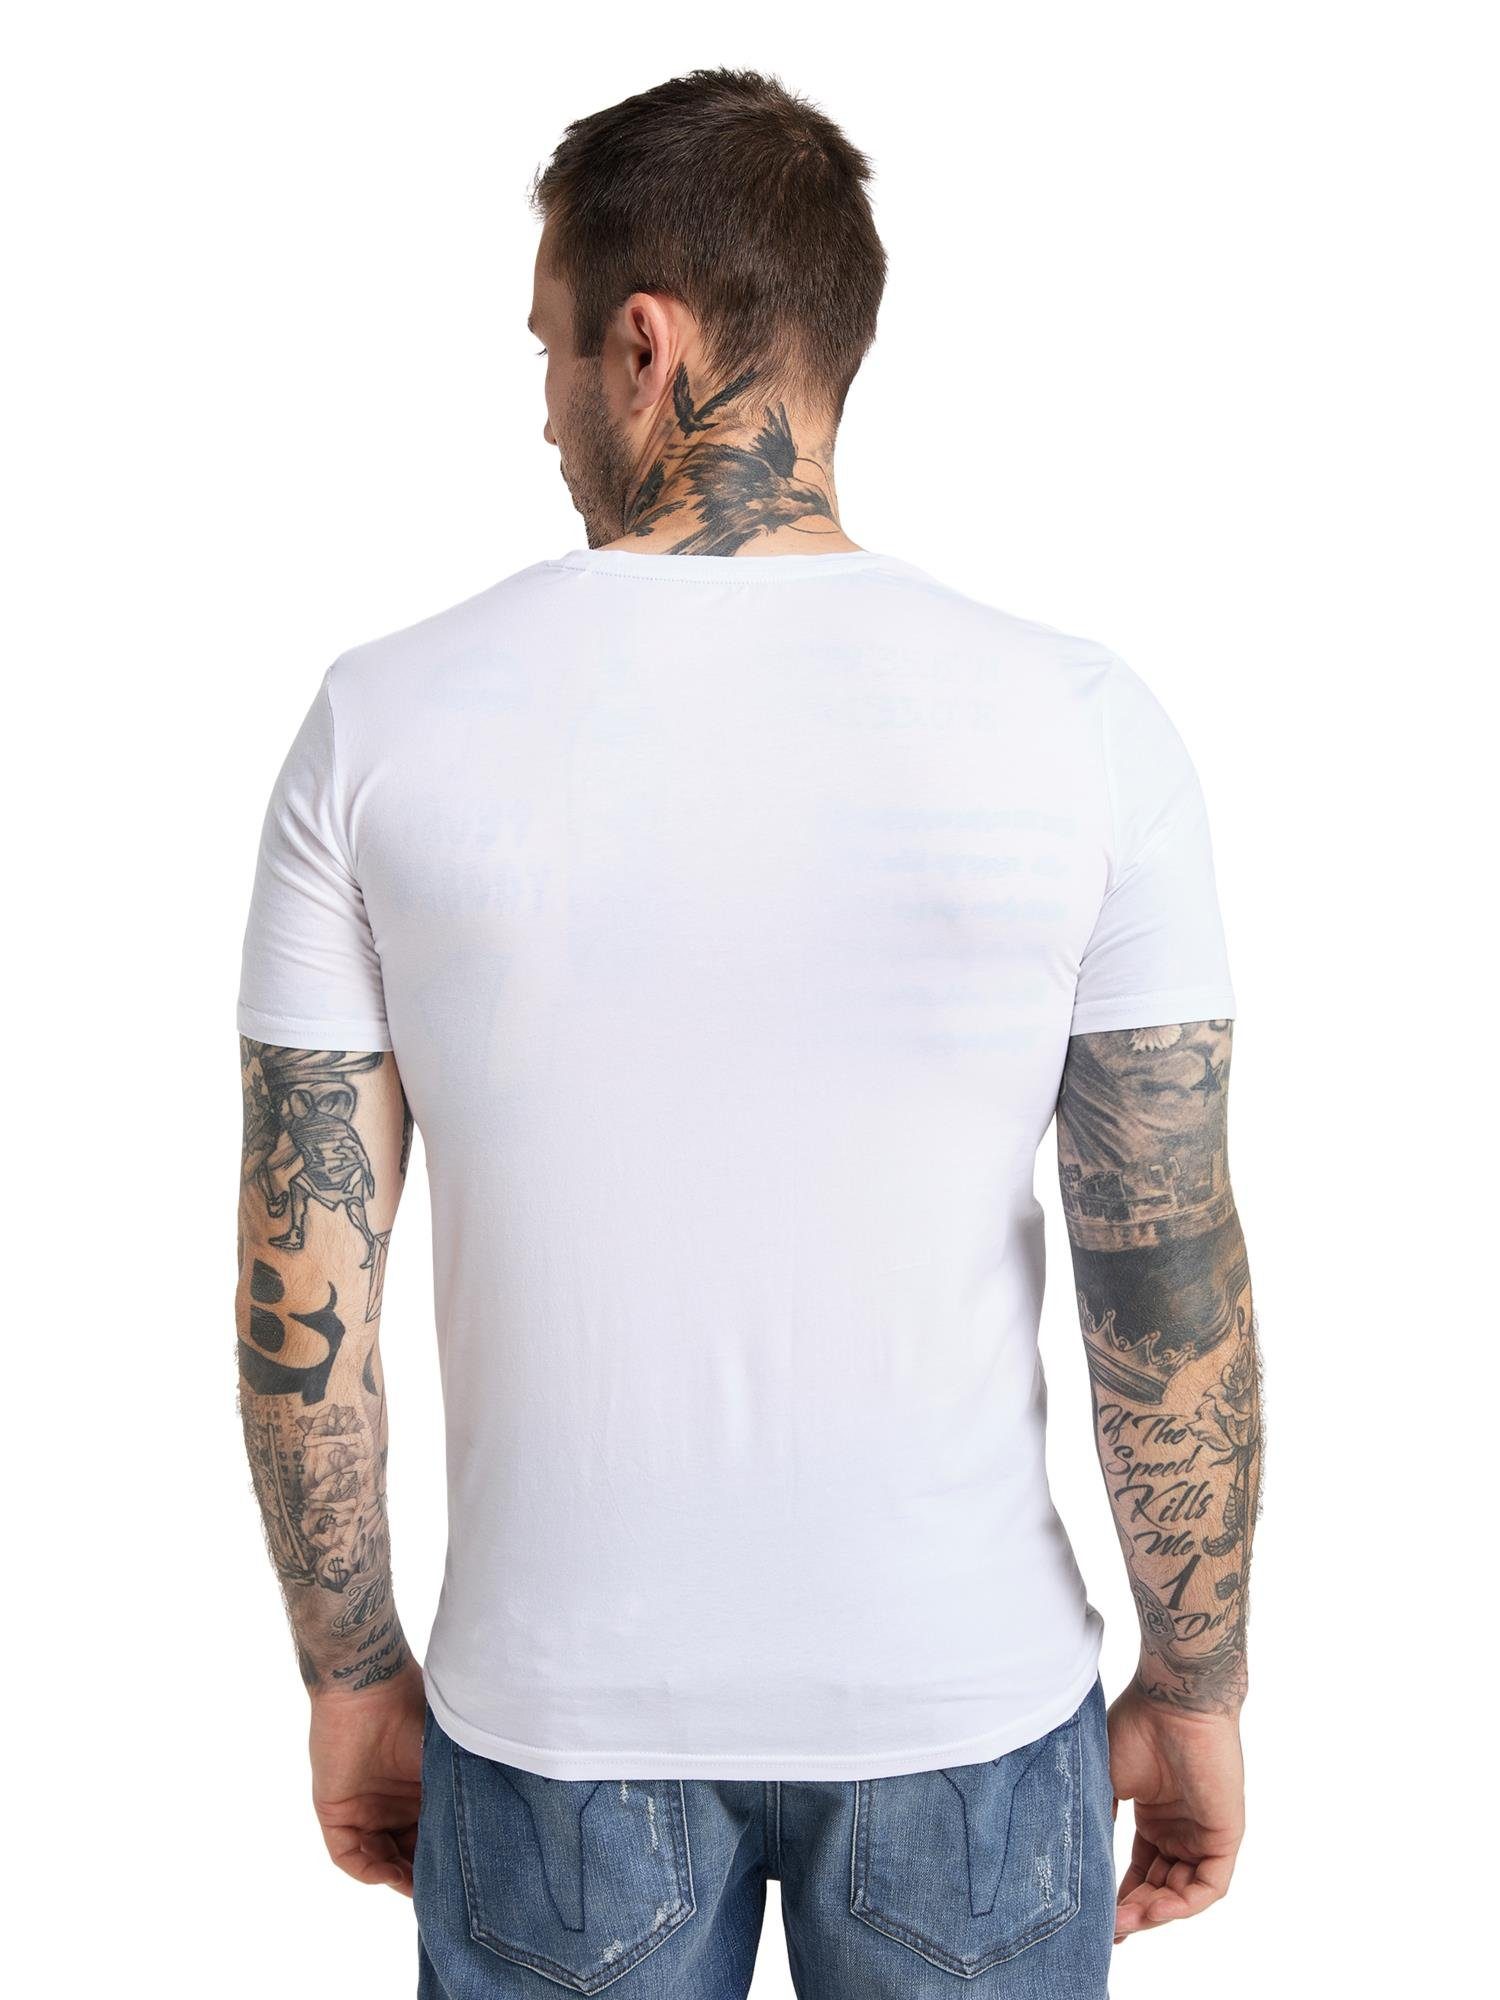 COLUCCI T-Shirt Weiß Cavallari CARLO